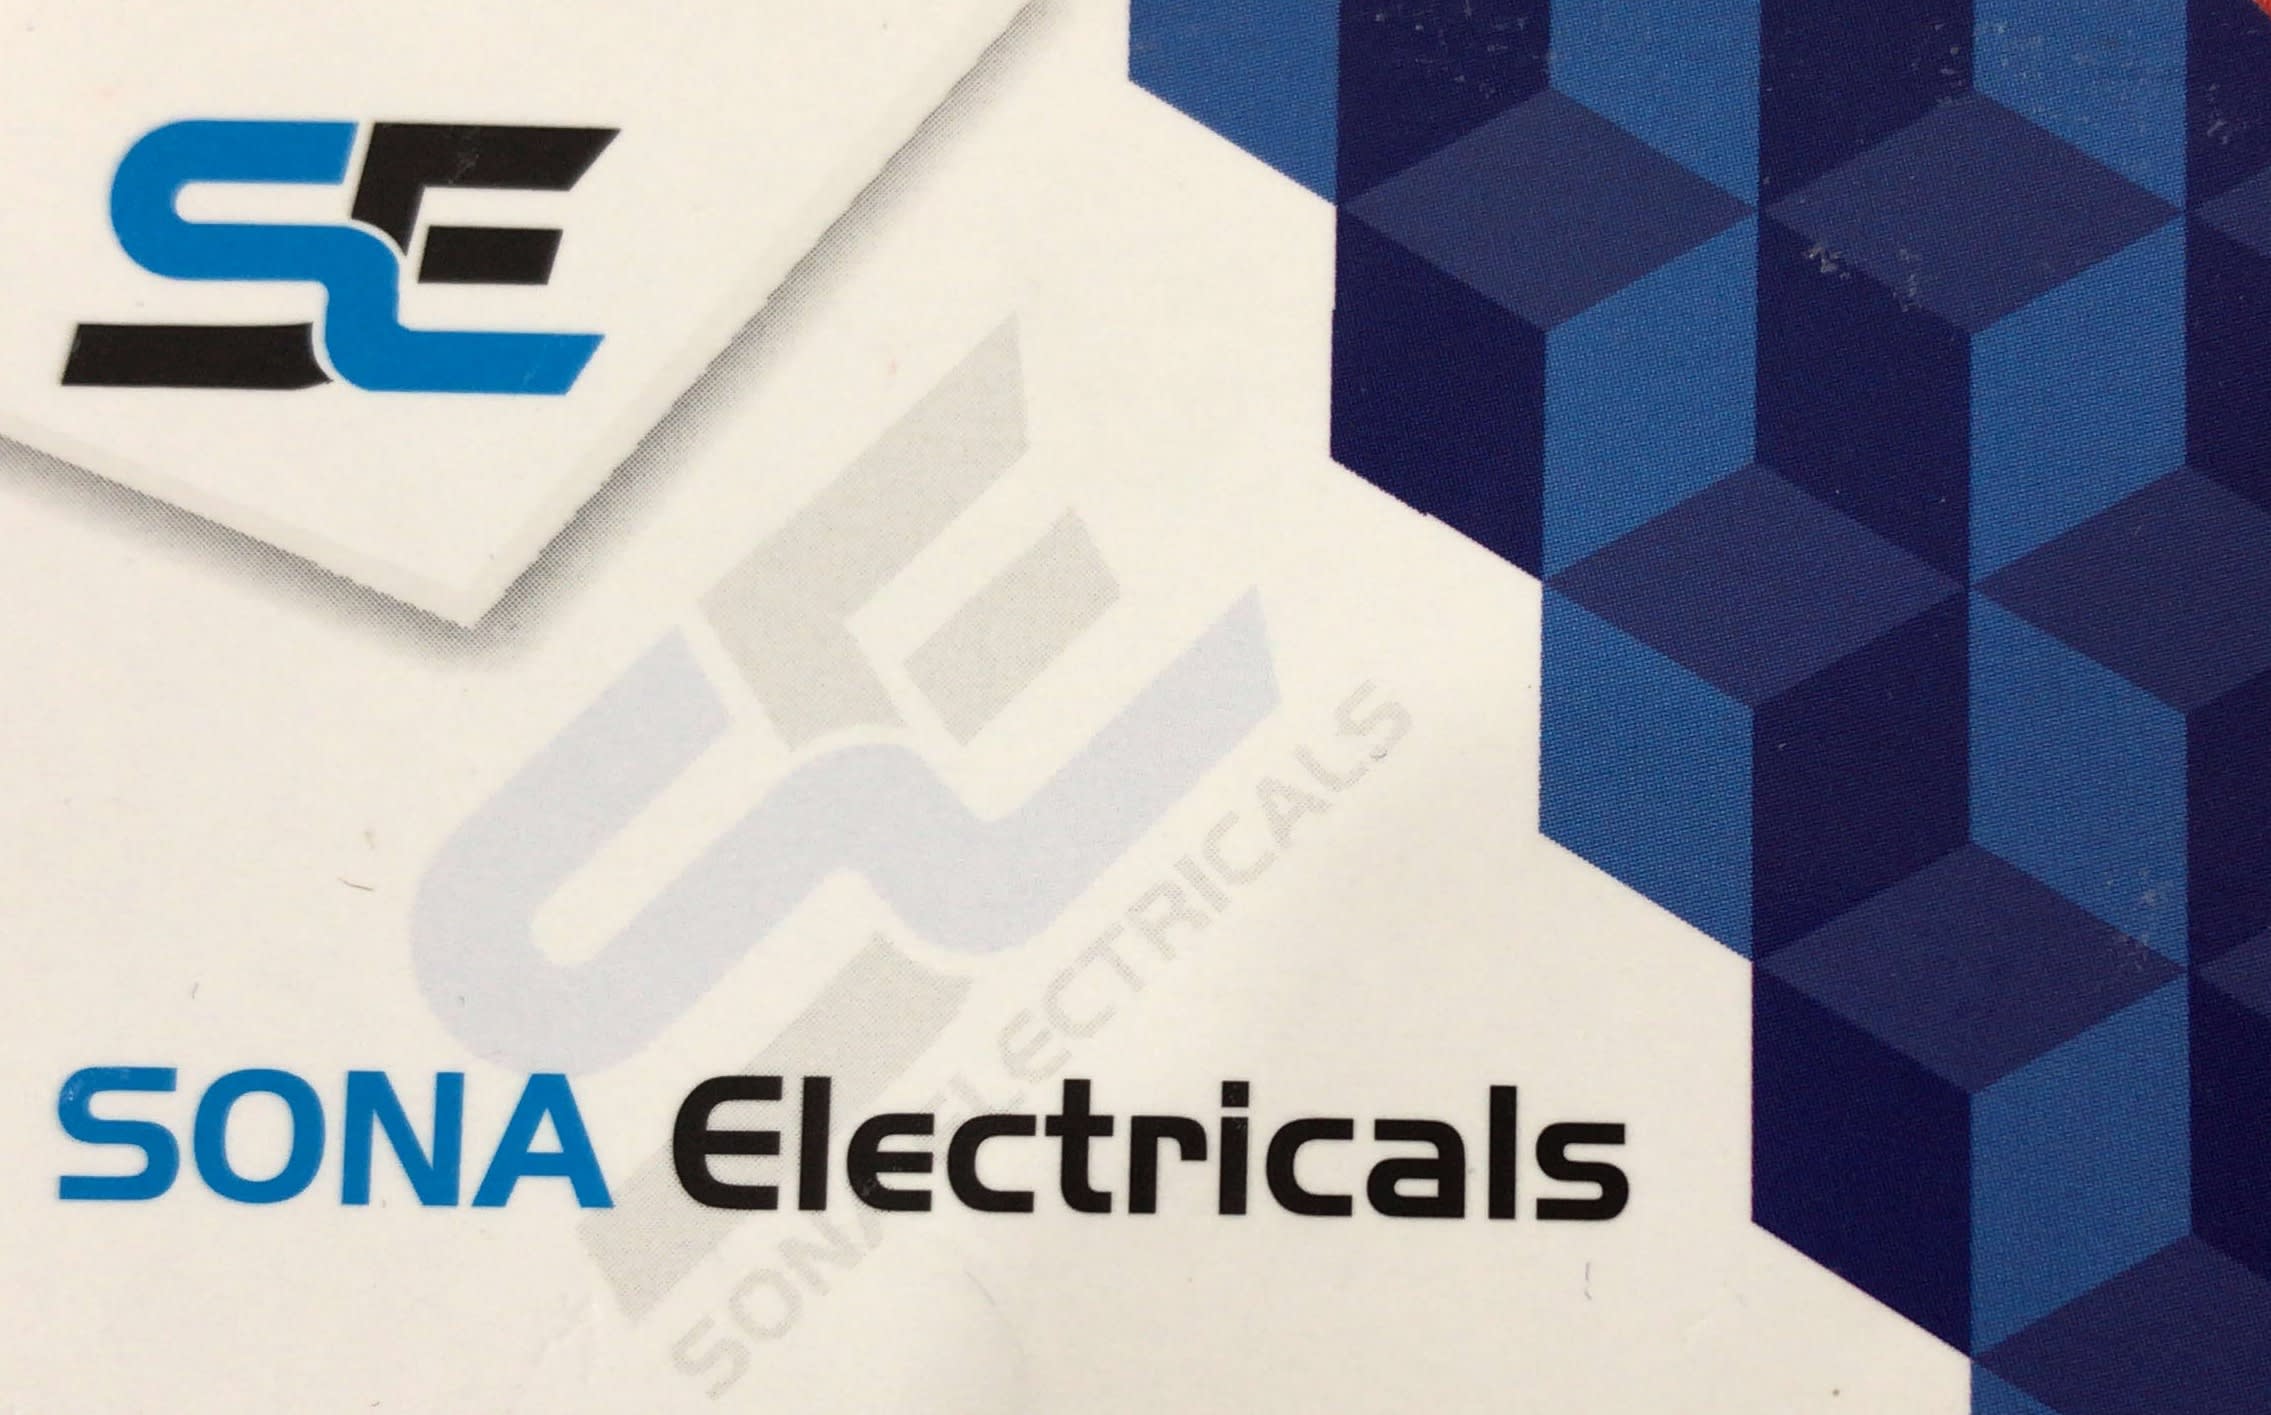 Sona Electricals